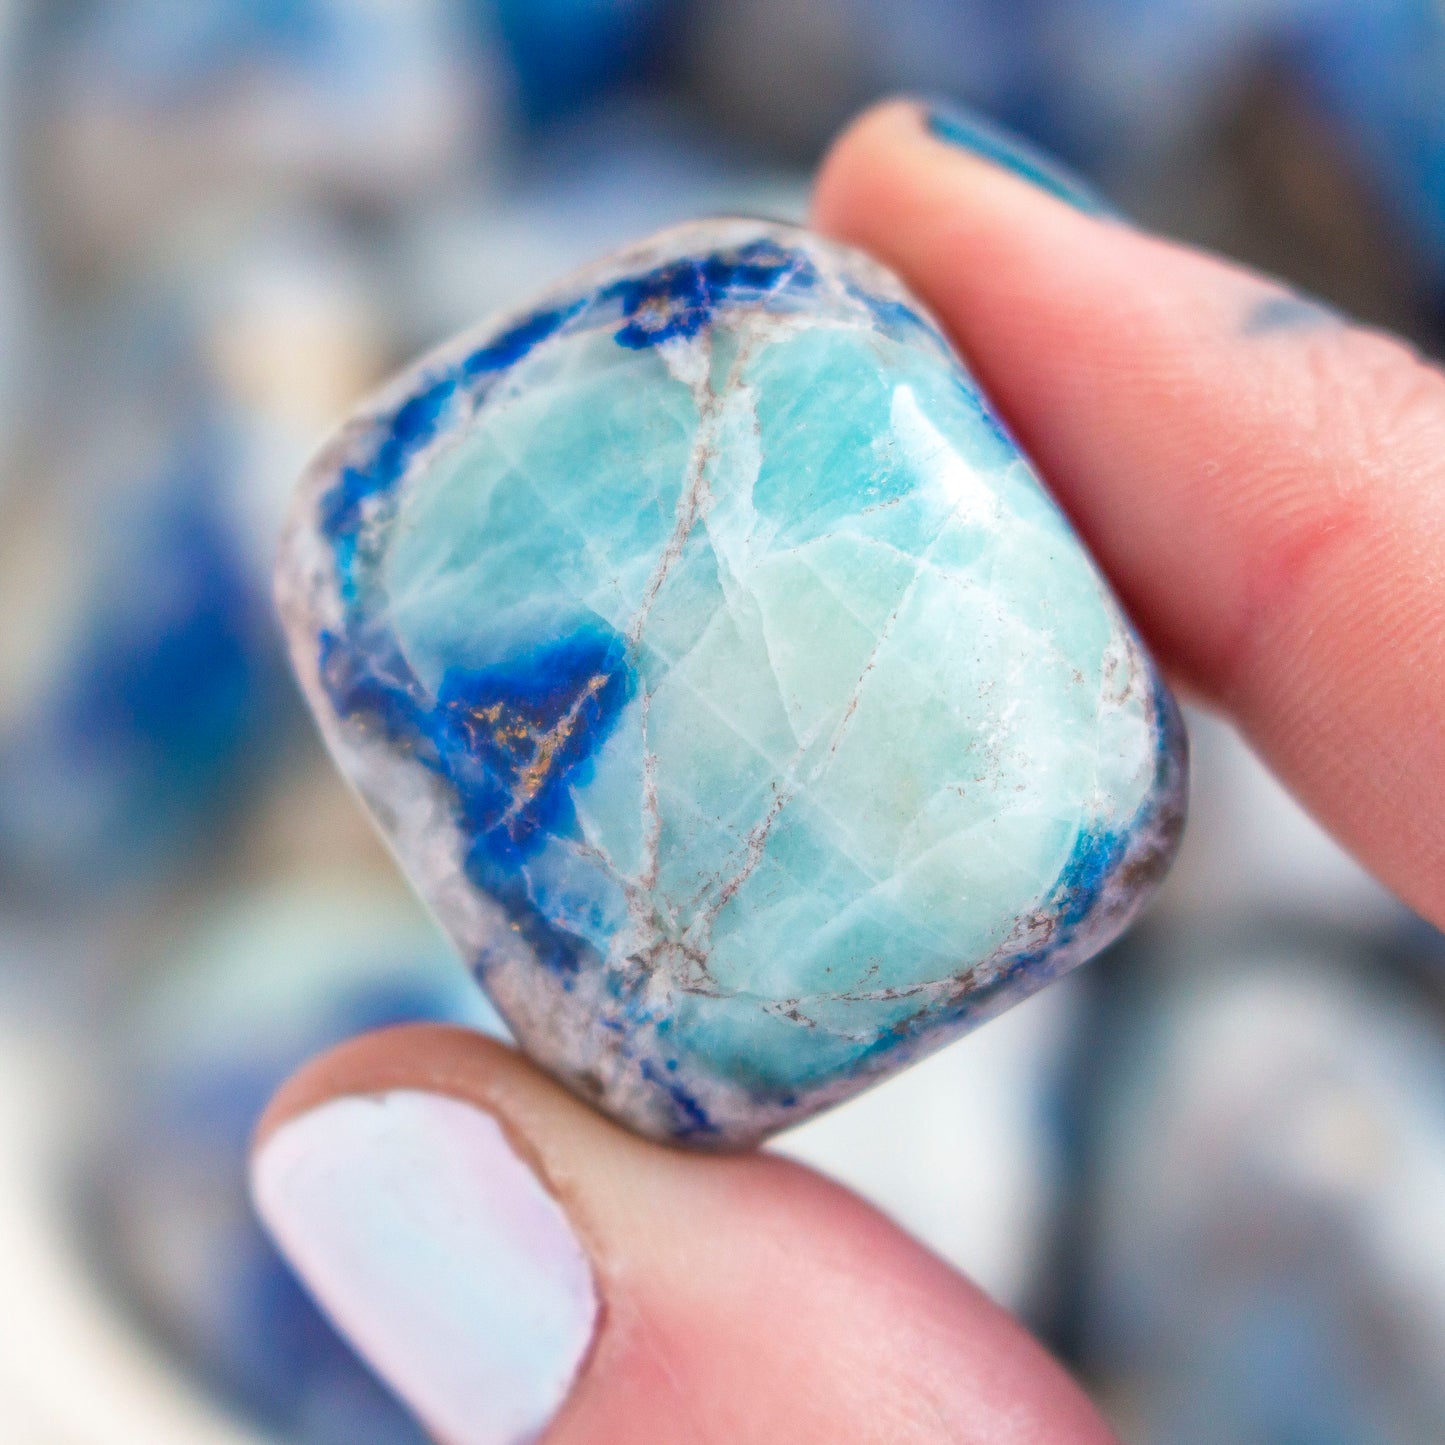 Hackmanite, Pyrite, Quartz, Granite, Lapis Lazuli Tumblestone | Mixed Mineral Crystal | UV Reactive Stone